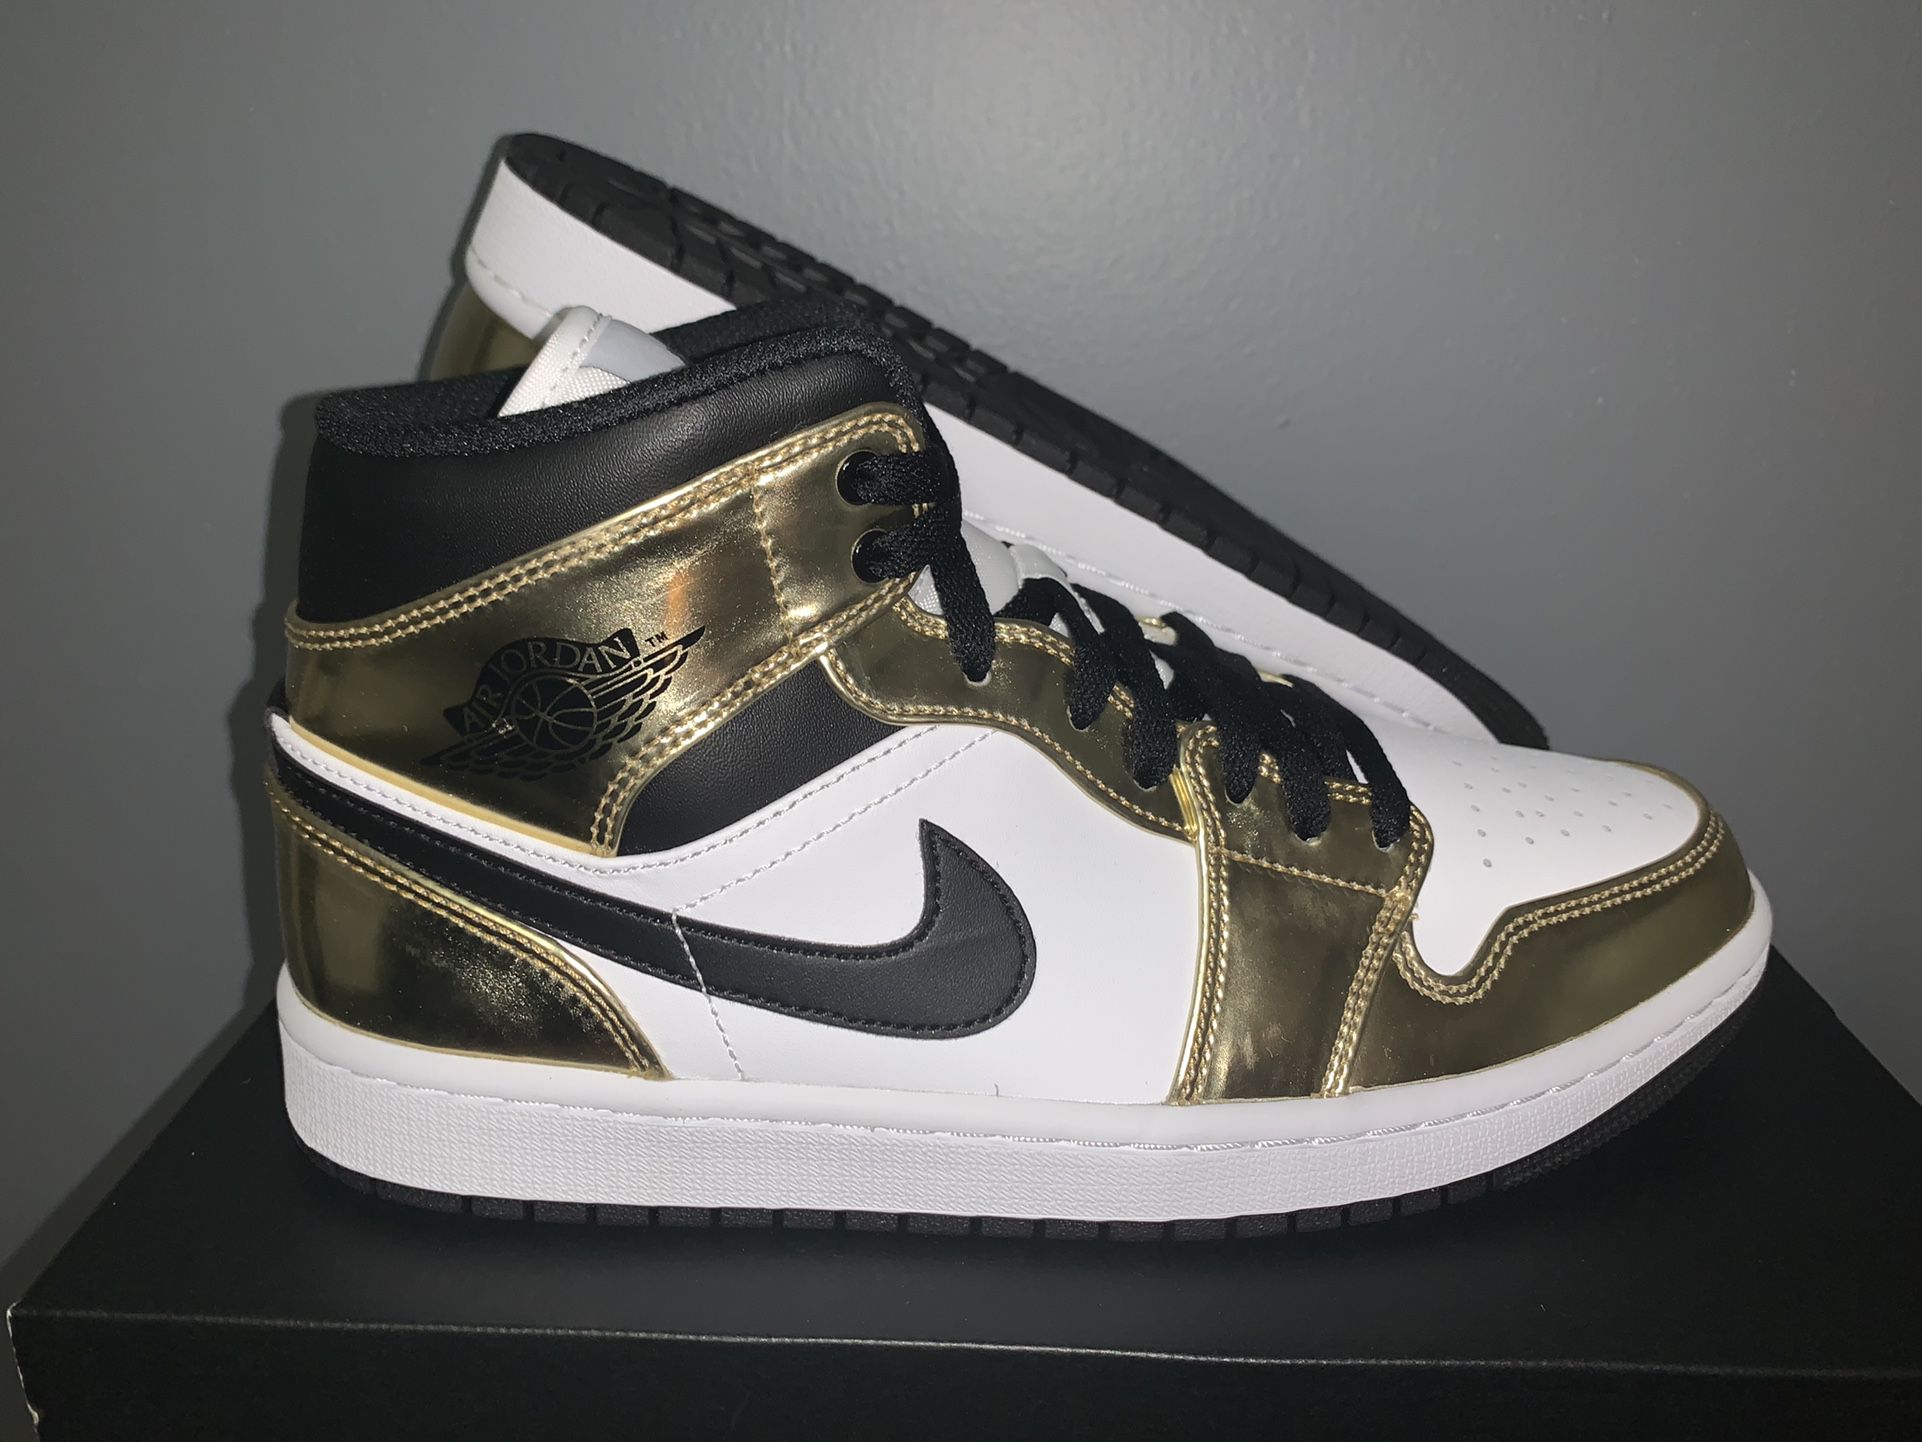 Jordan 1 Gold size 8 $150